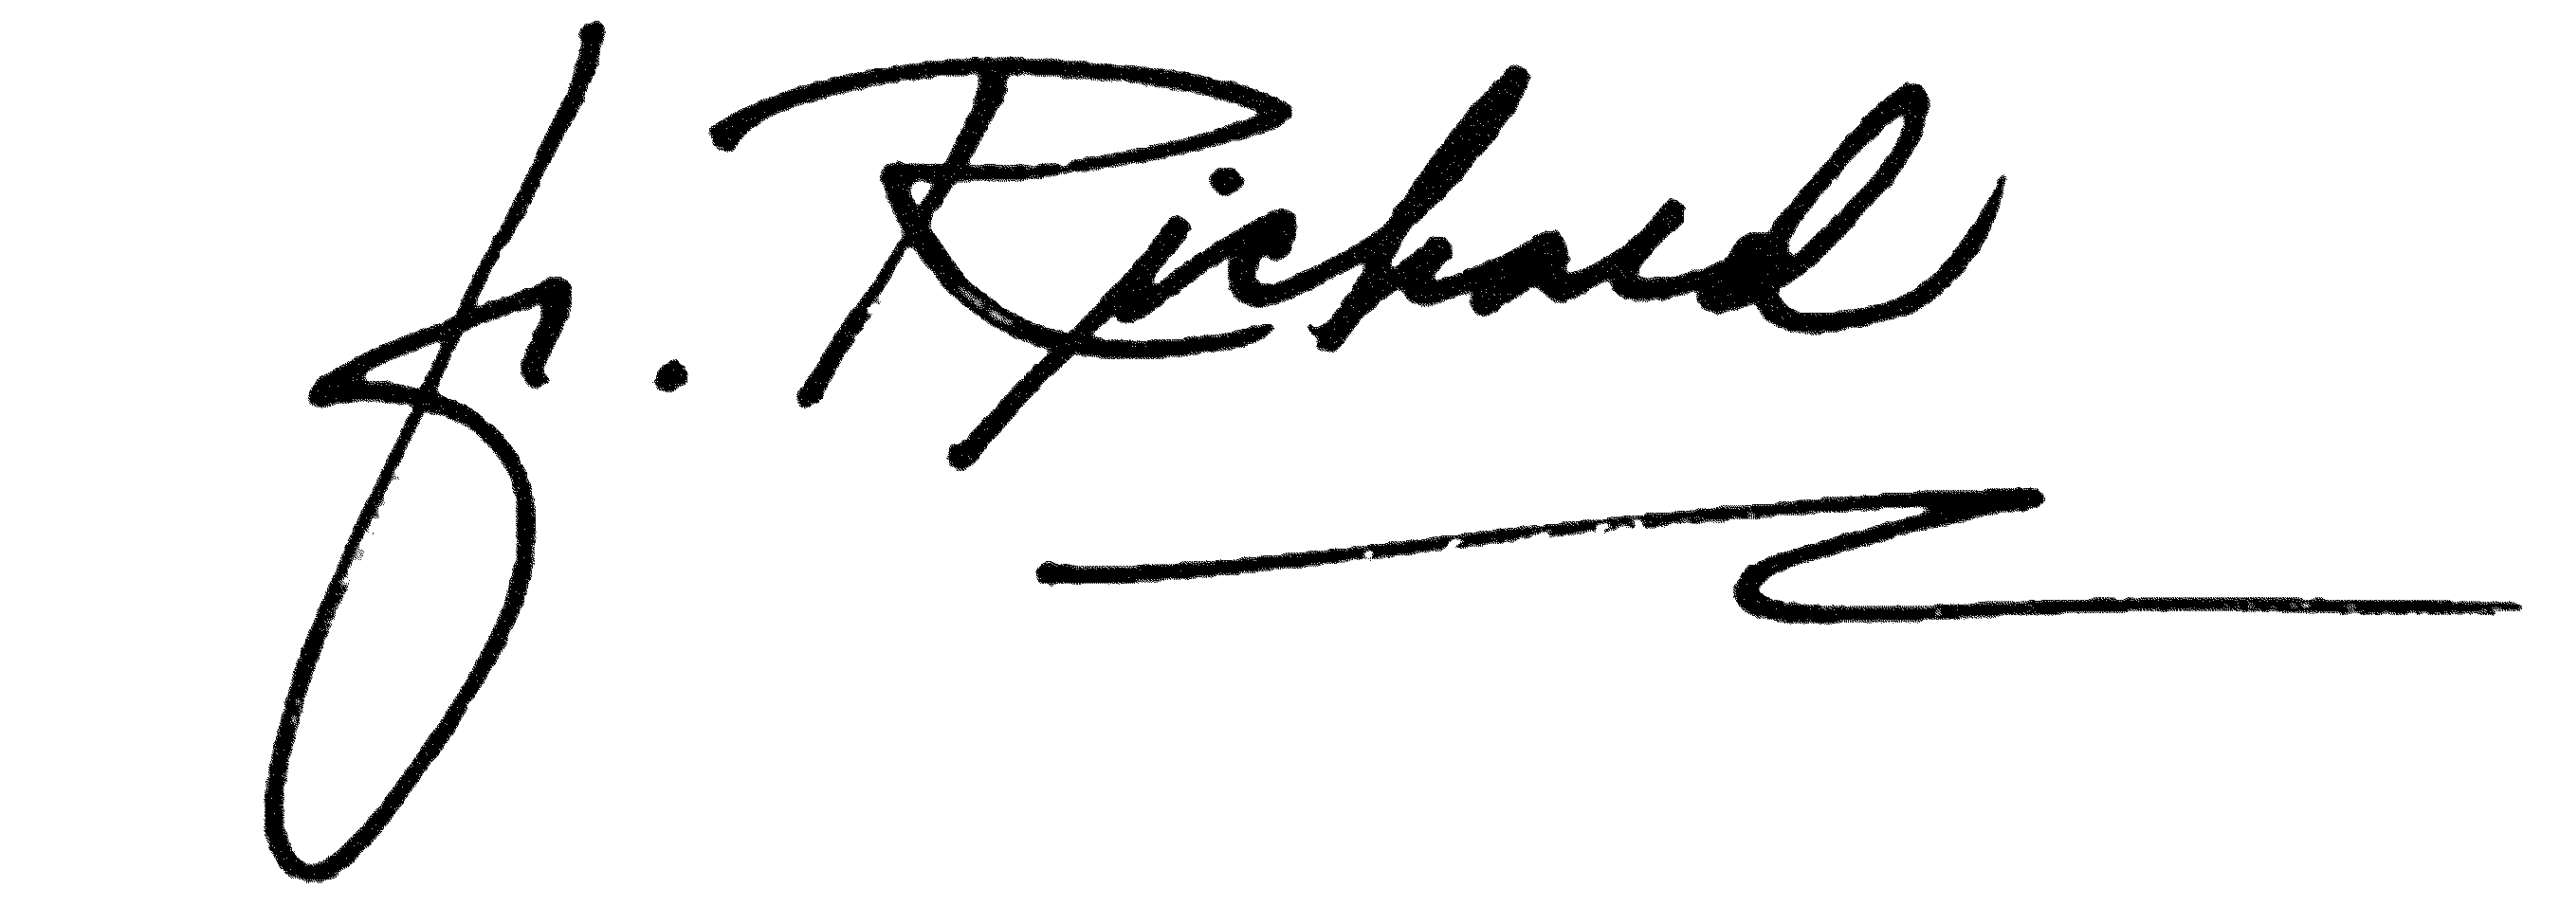 Fr. RIchard's signature